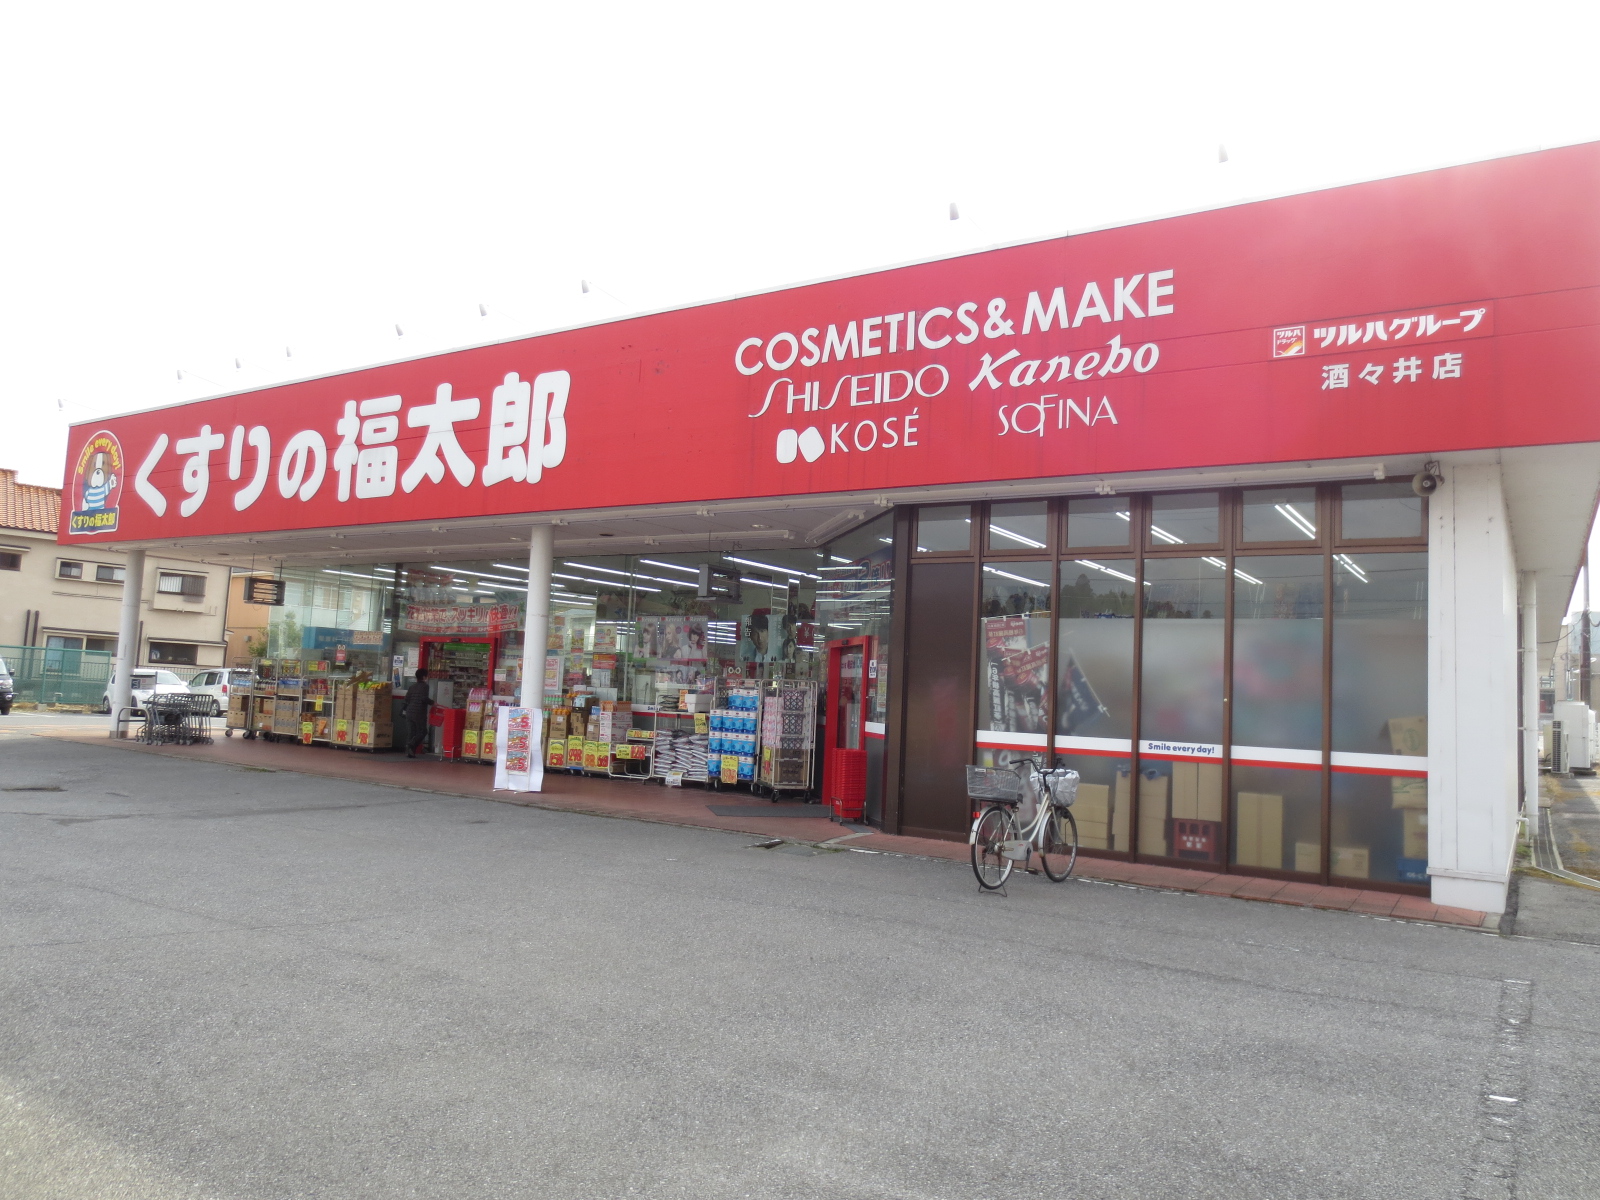 Dorakkusutoa. Medicine of Fukutaro Shisui shop 457m until (drugstore)